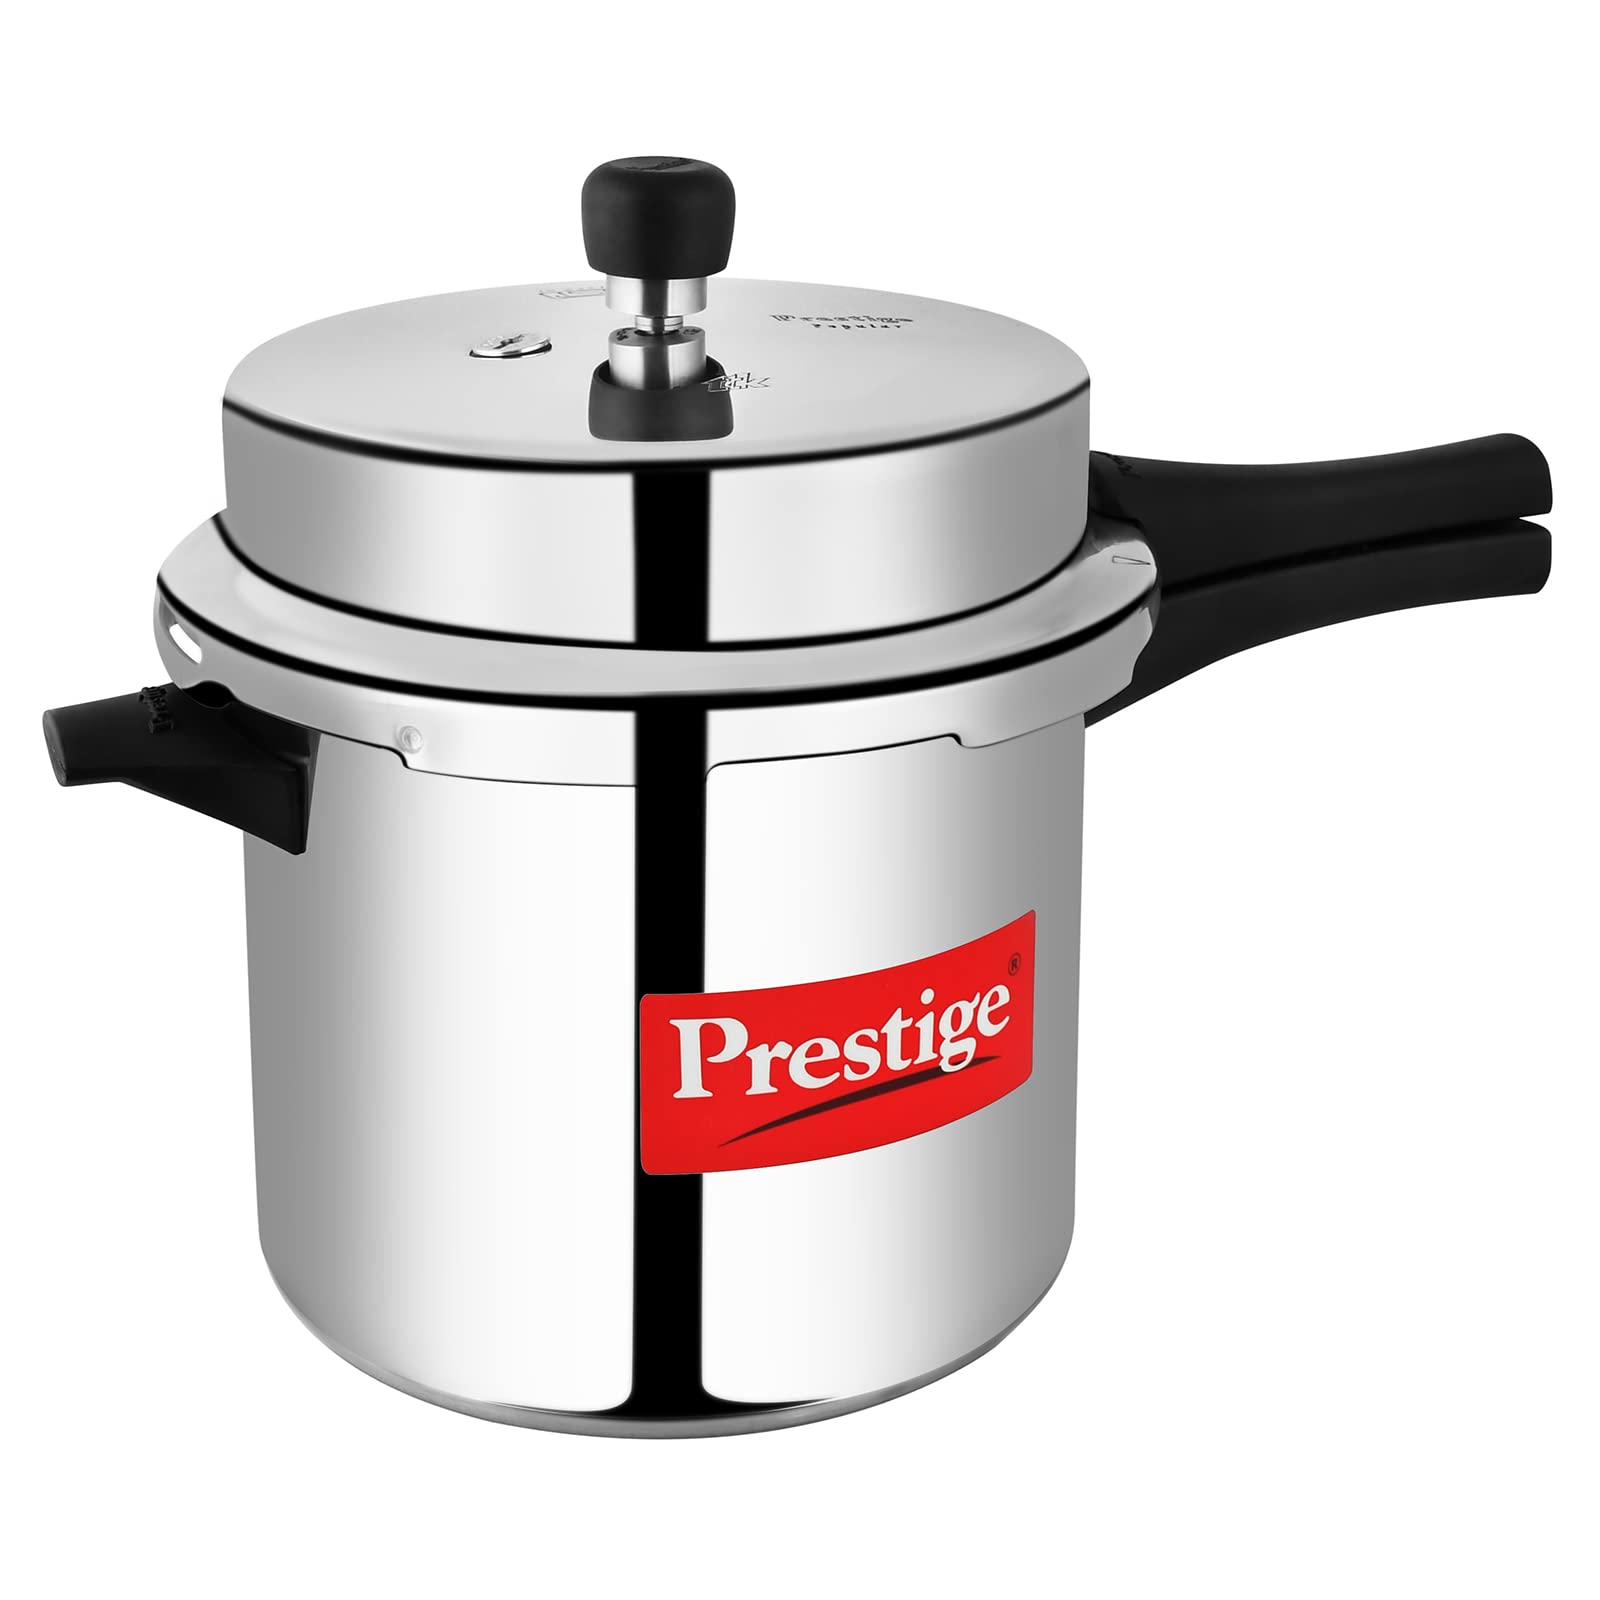 Prestige Popular Aluminium Pressure Cooker Silver, 6 Ltr - PPAPC6